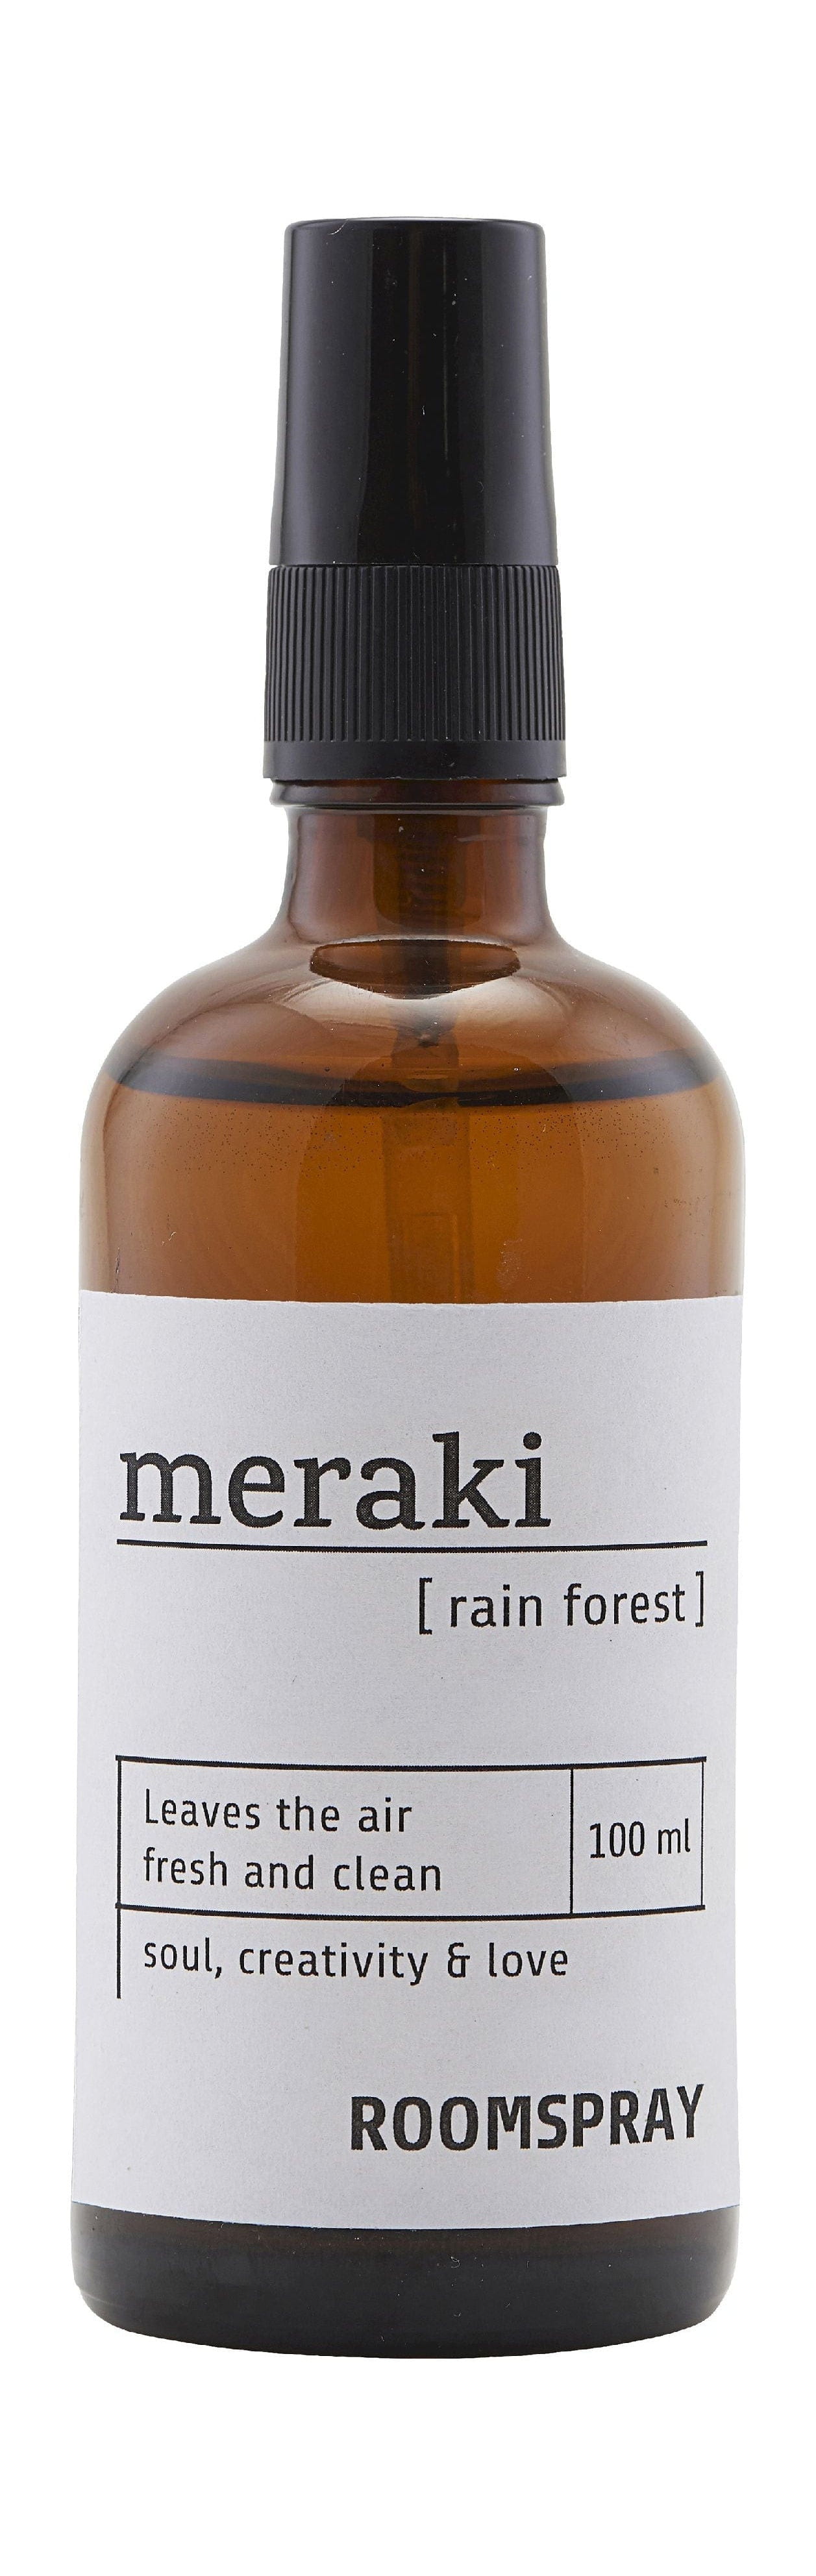 Meraki Room Spray 100 ml, las deszczowy